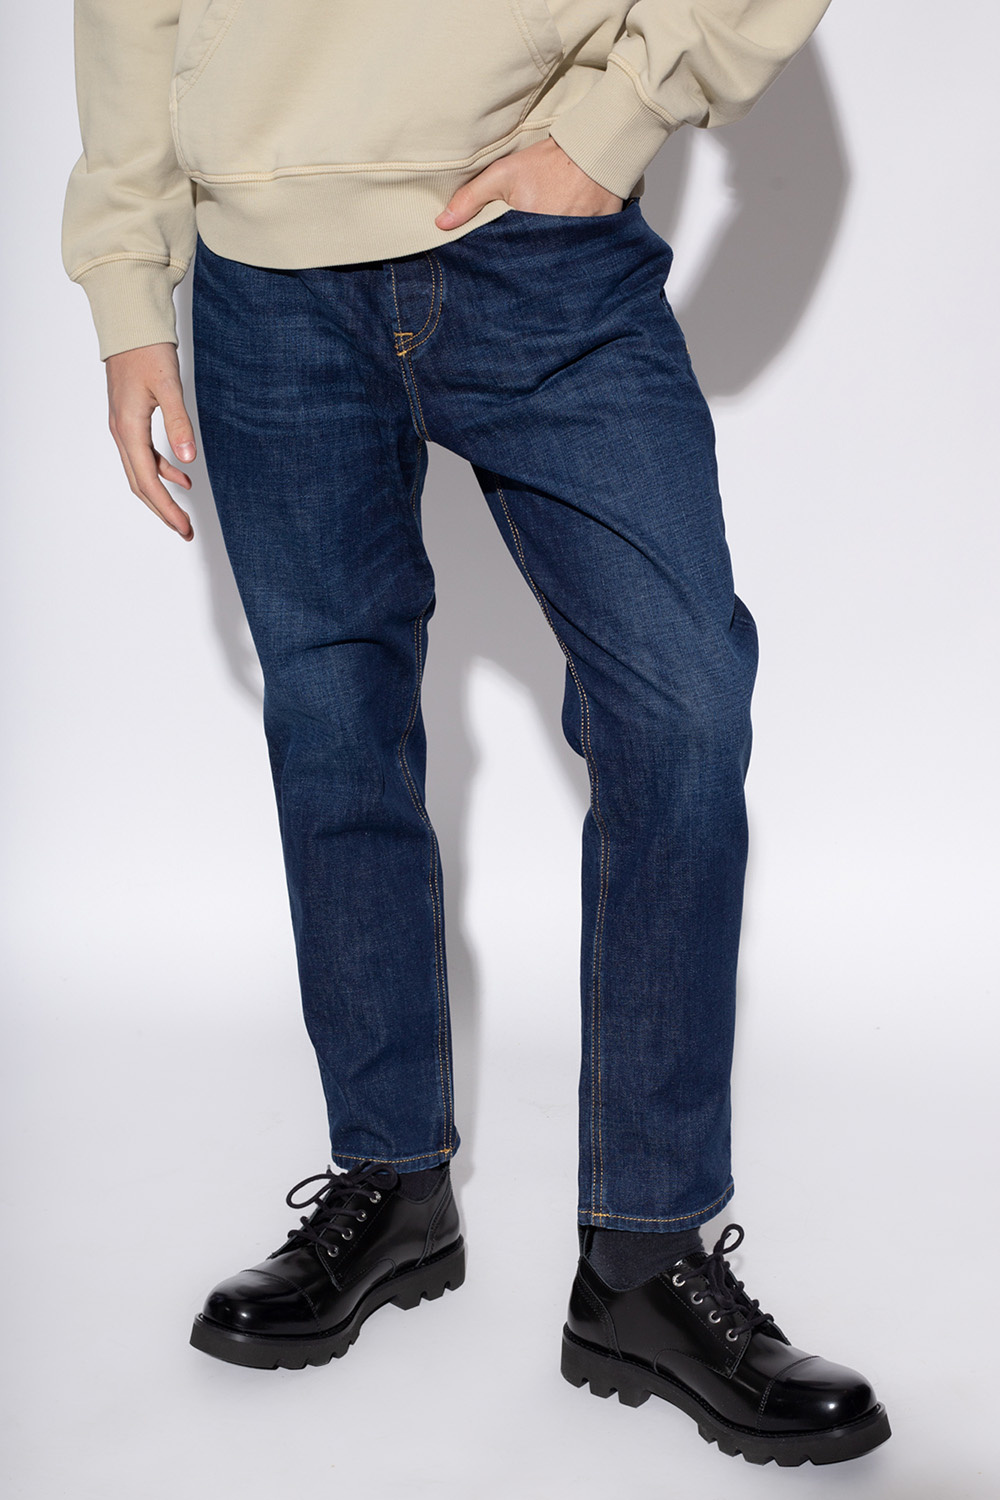 Diesel \'D | Men\'s Clothing | bustier puffball peplum dress - Fining\' jeans  - JmksportShops